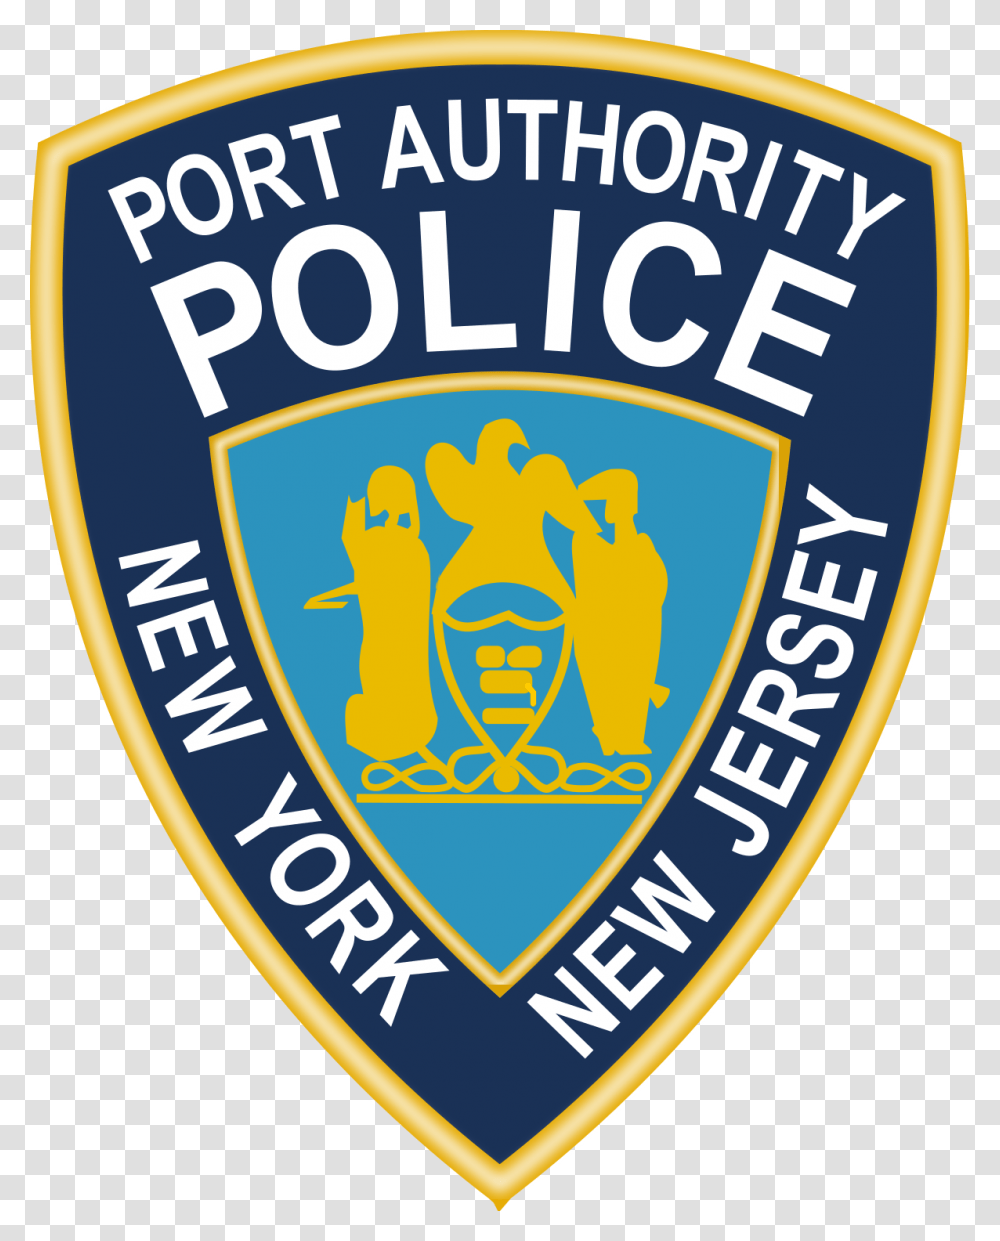 Port Authority Police Logo, Trademark, Badge, Emblem Transparent Png